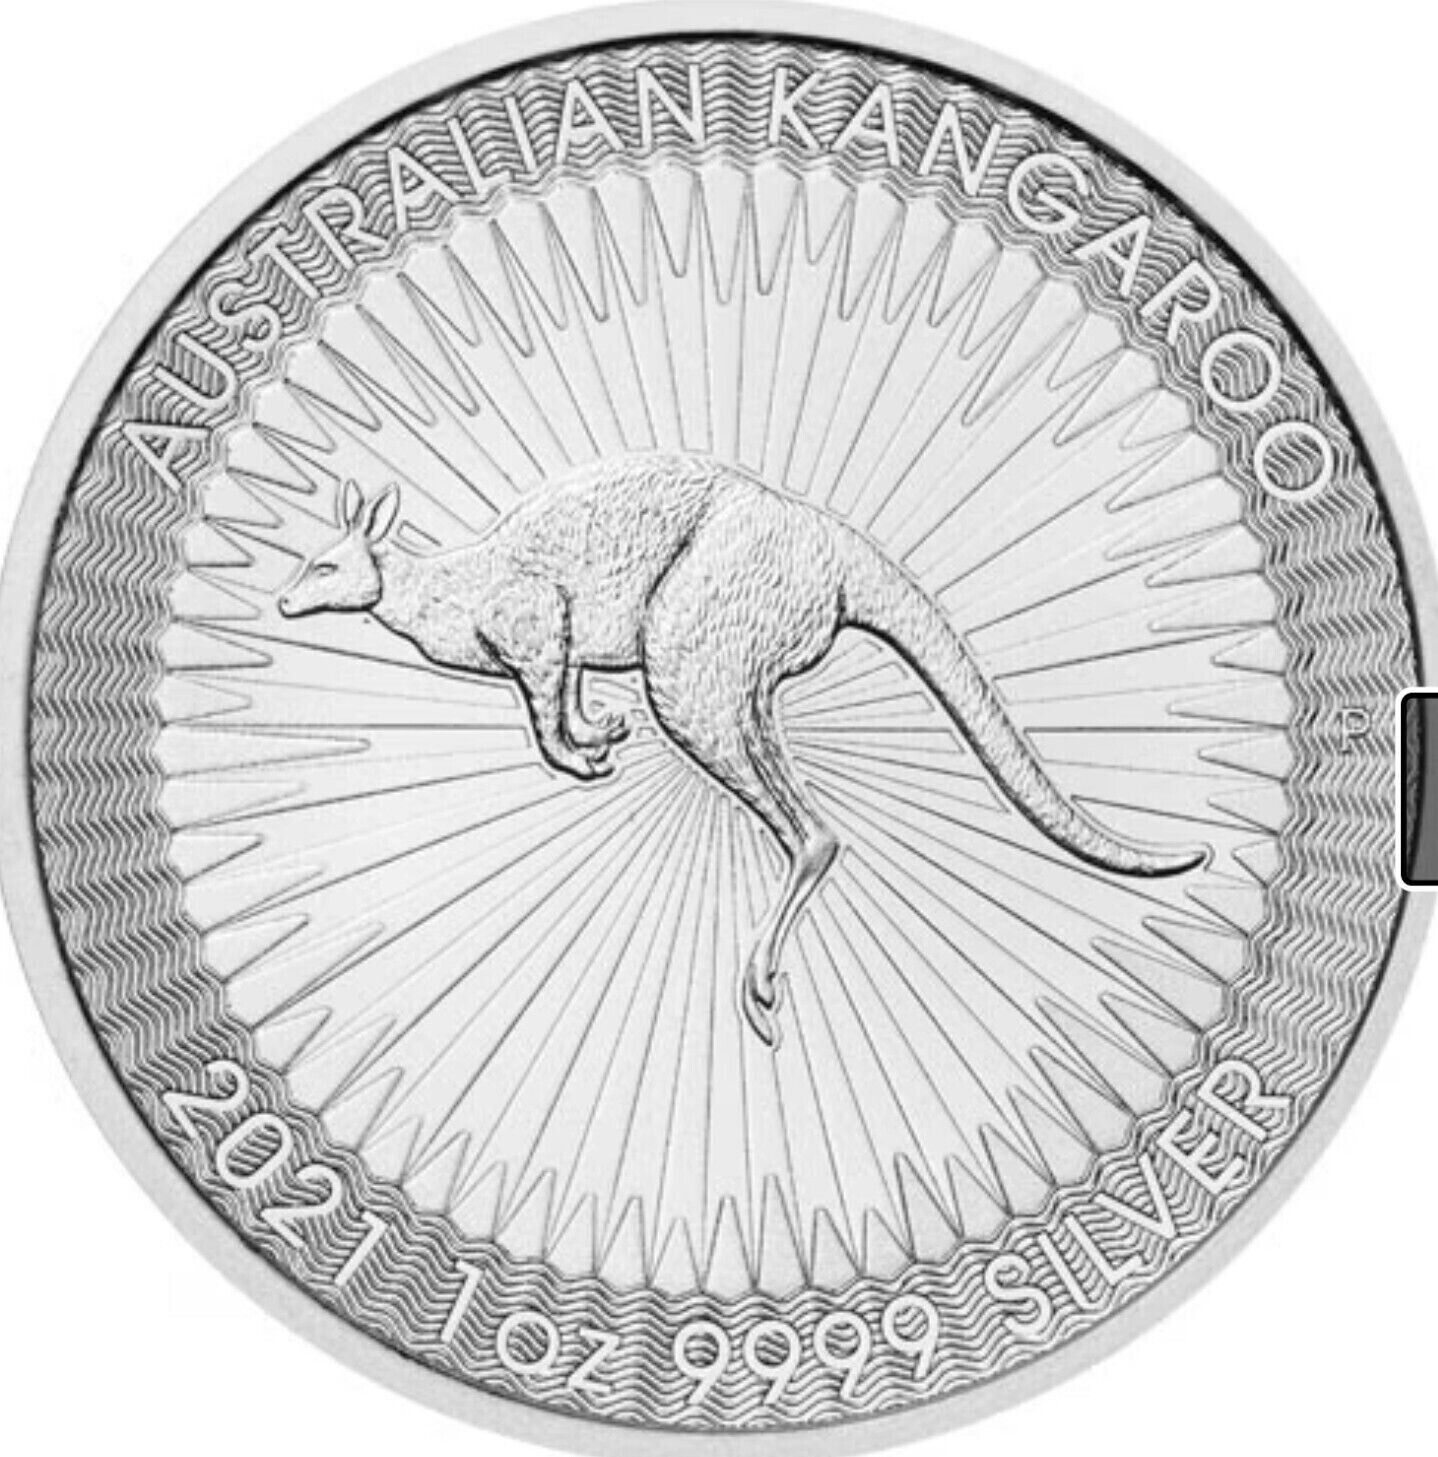 RARE 2021 AUSTRALIAN KANGAROO-PERTH MINT-.999 FINE SILVER 1oz - Sigma Verified